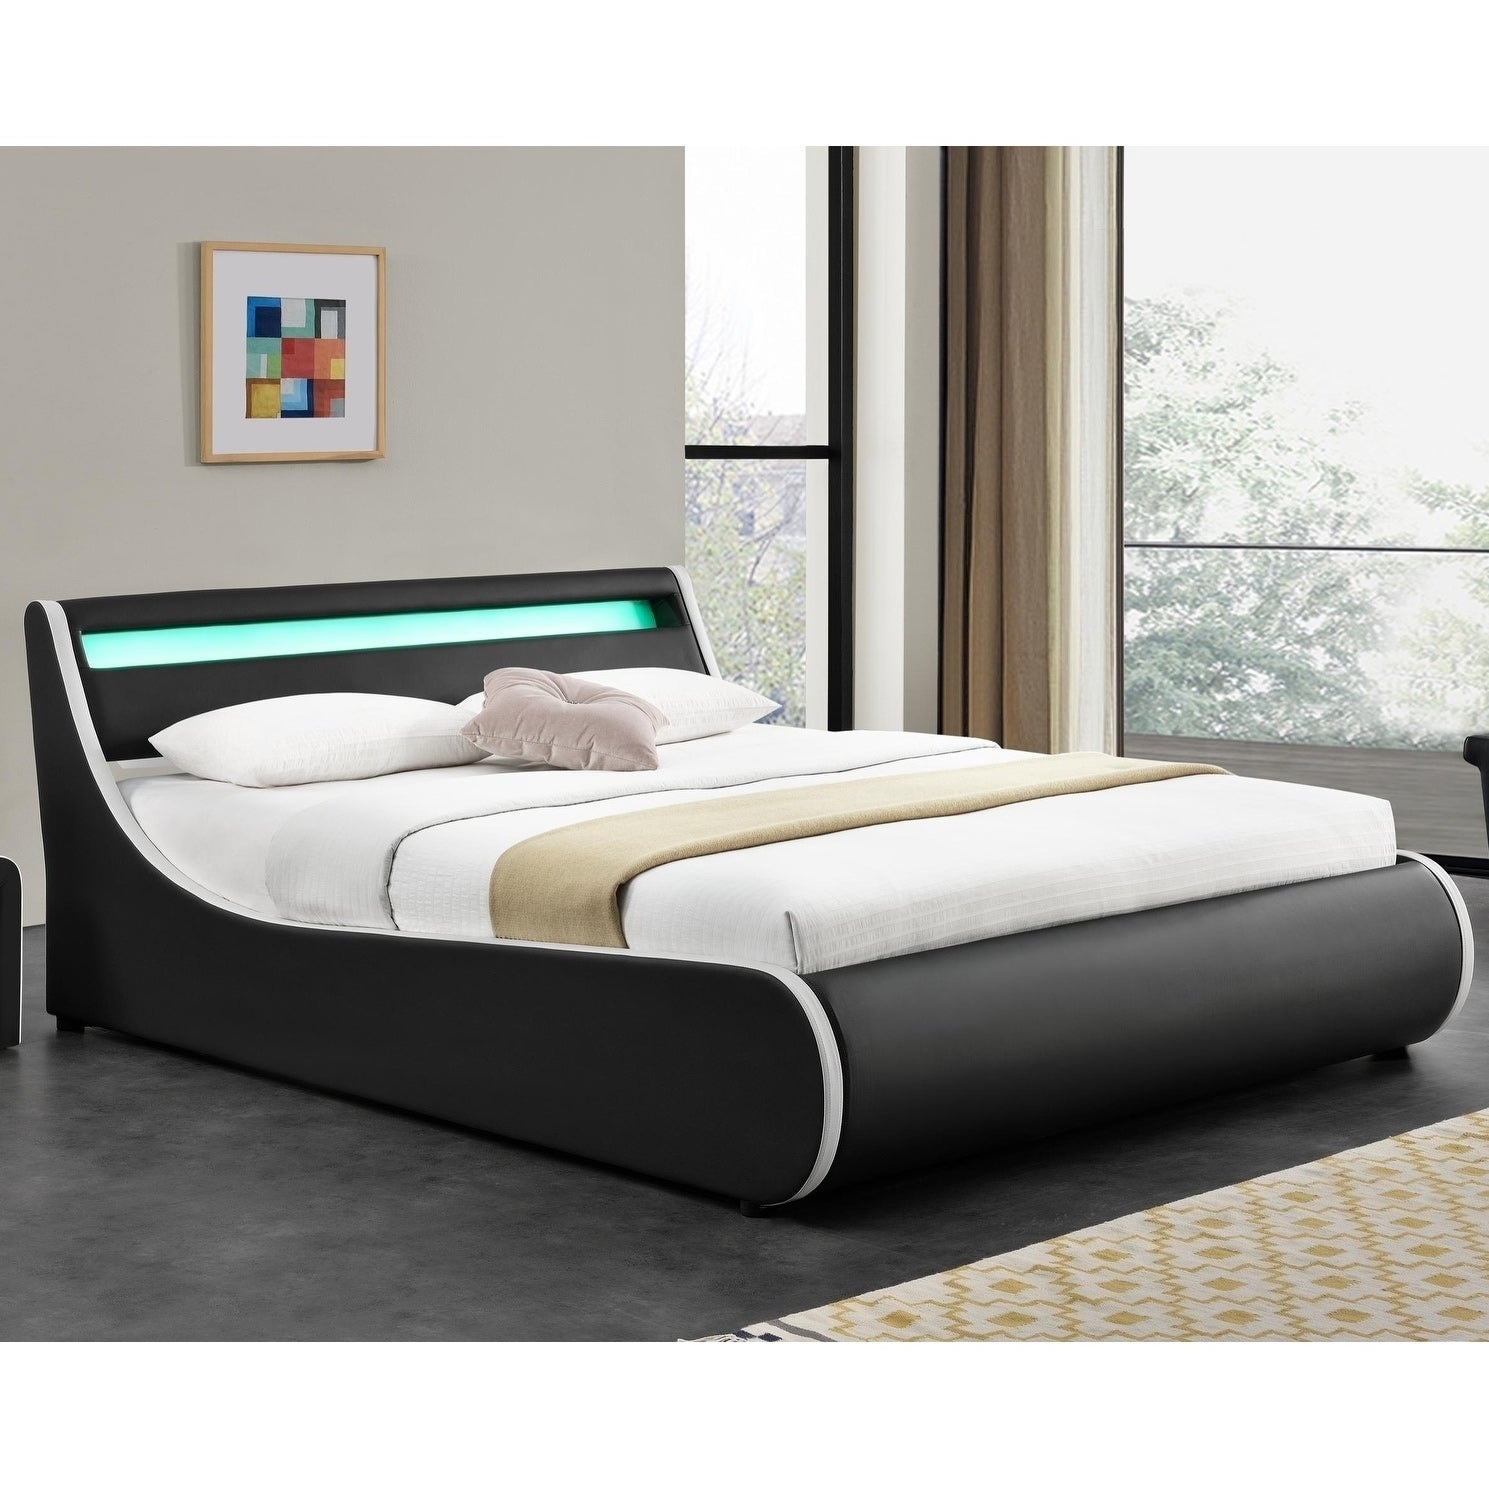 Kelly Upholstered Bed With Storage Drawers The Novogratz